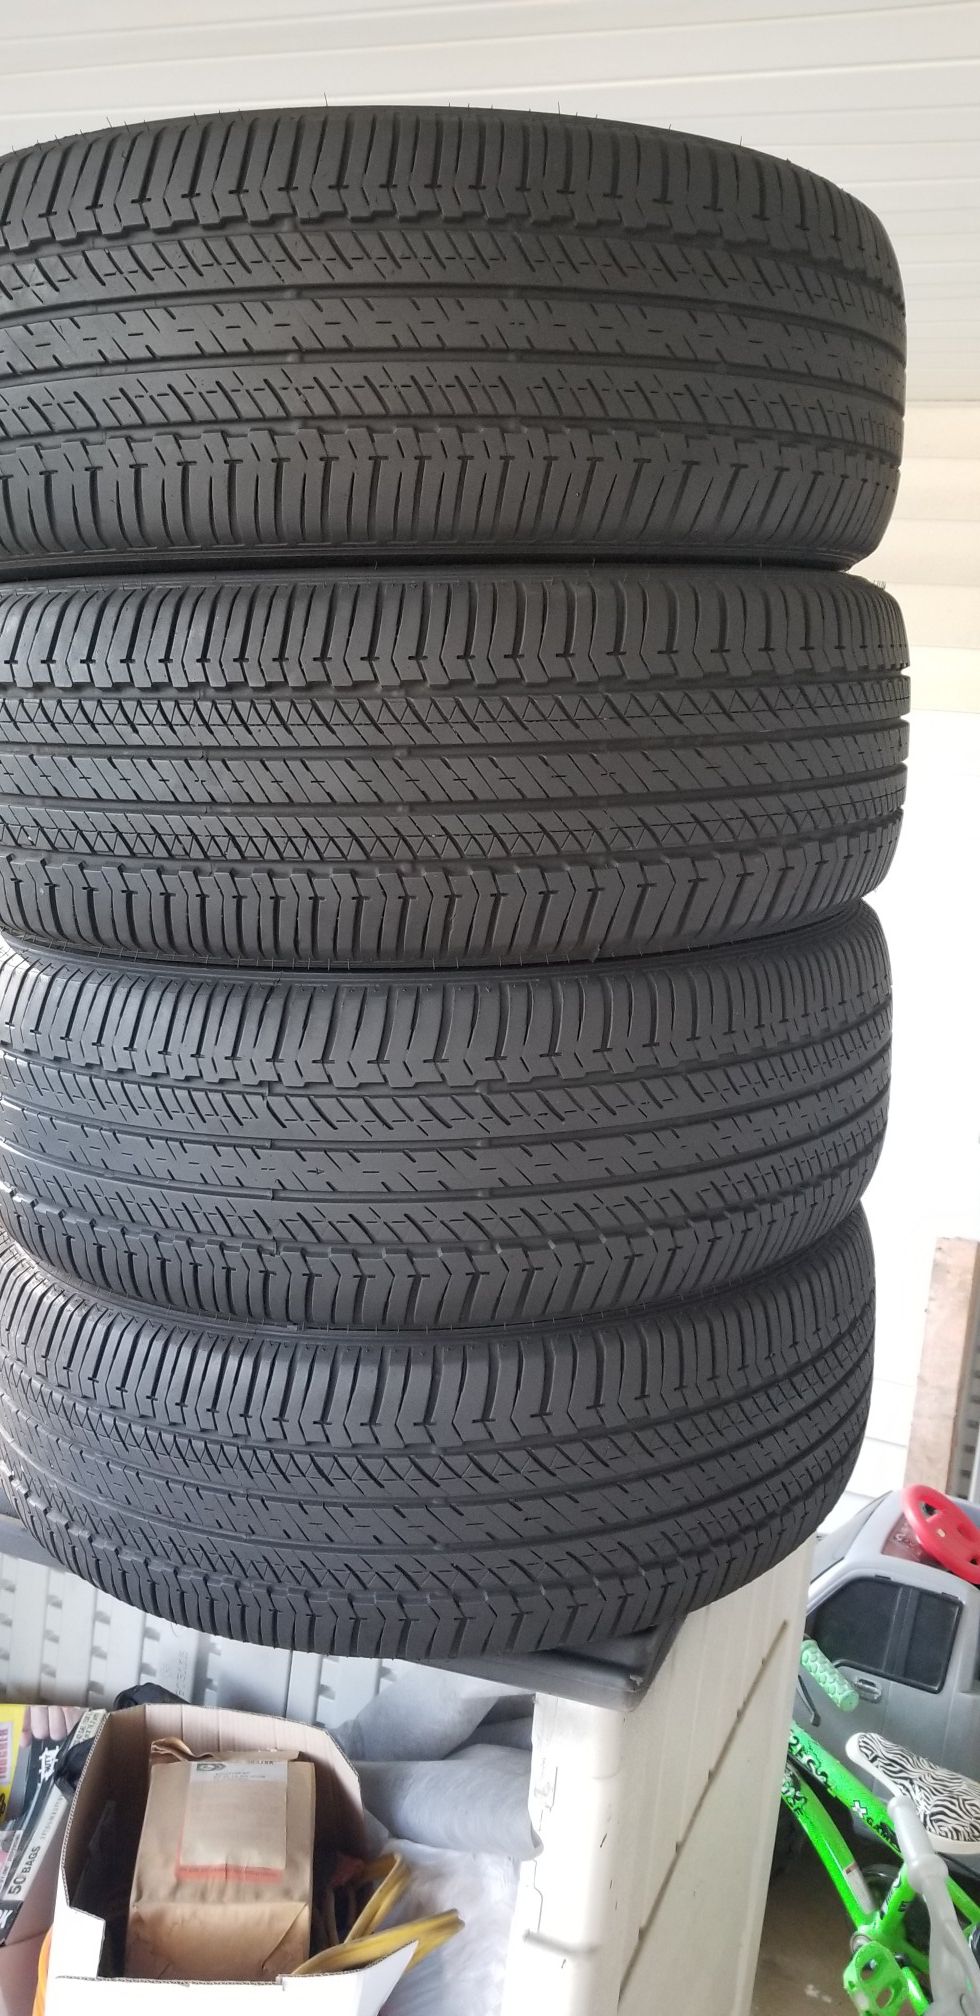 245/60/18 tires